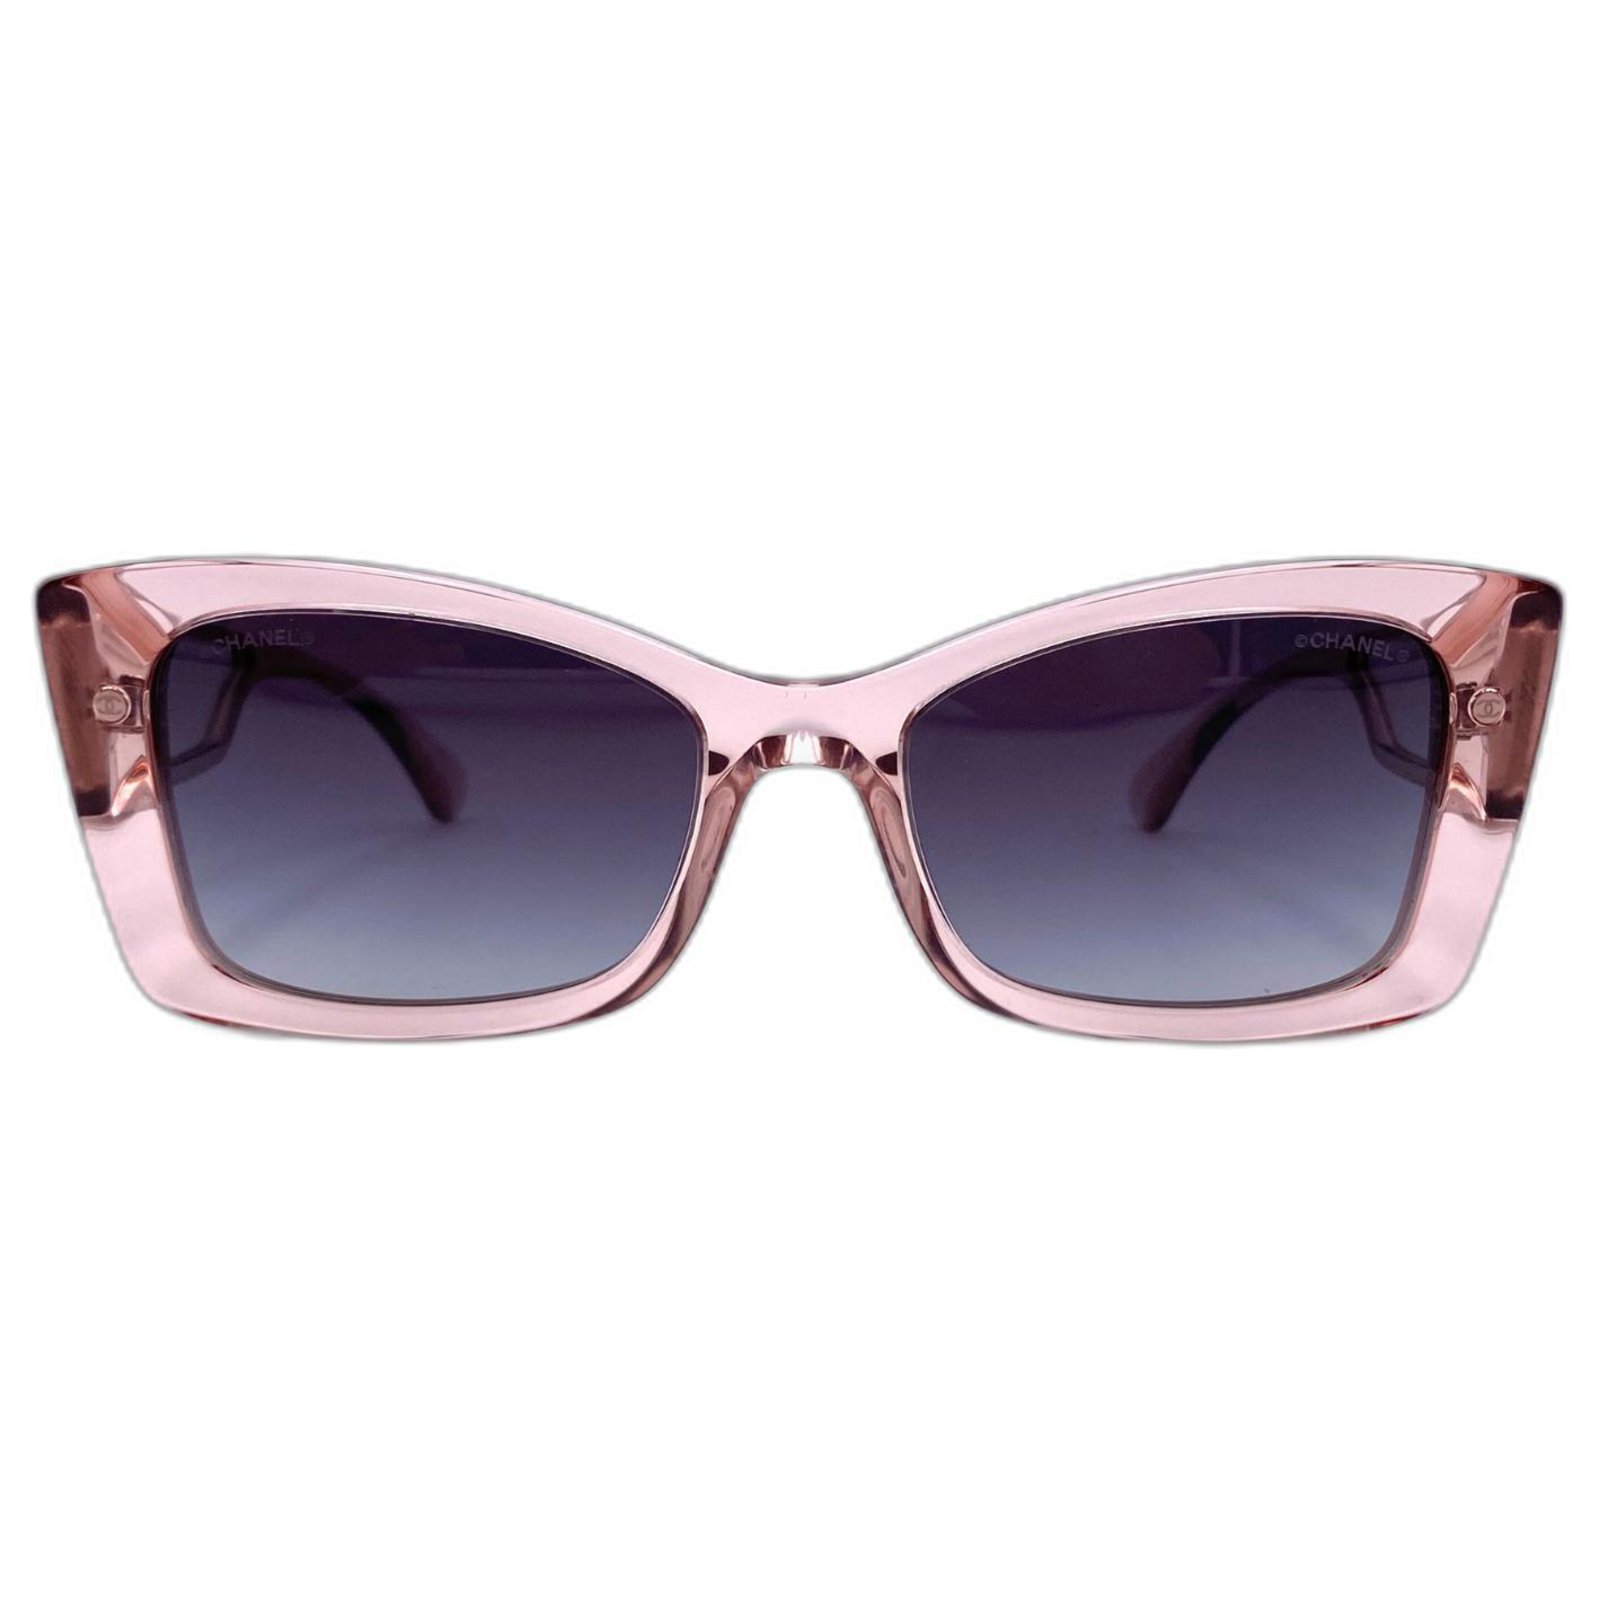 Chanel - Rectangular Sunglasses - Transparent Pink - Chanel